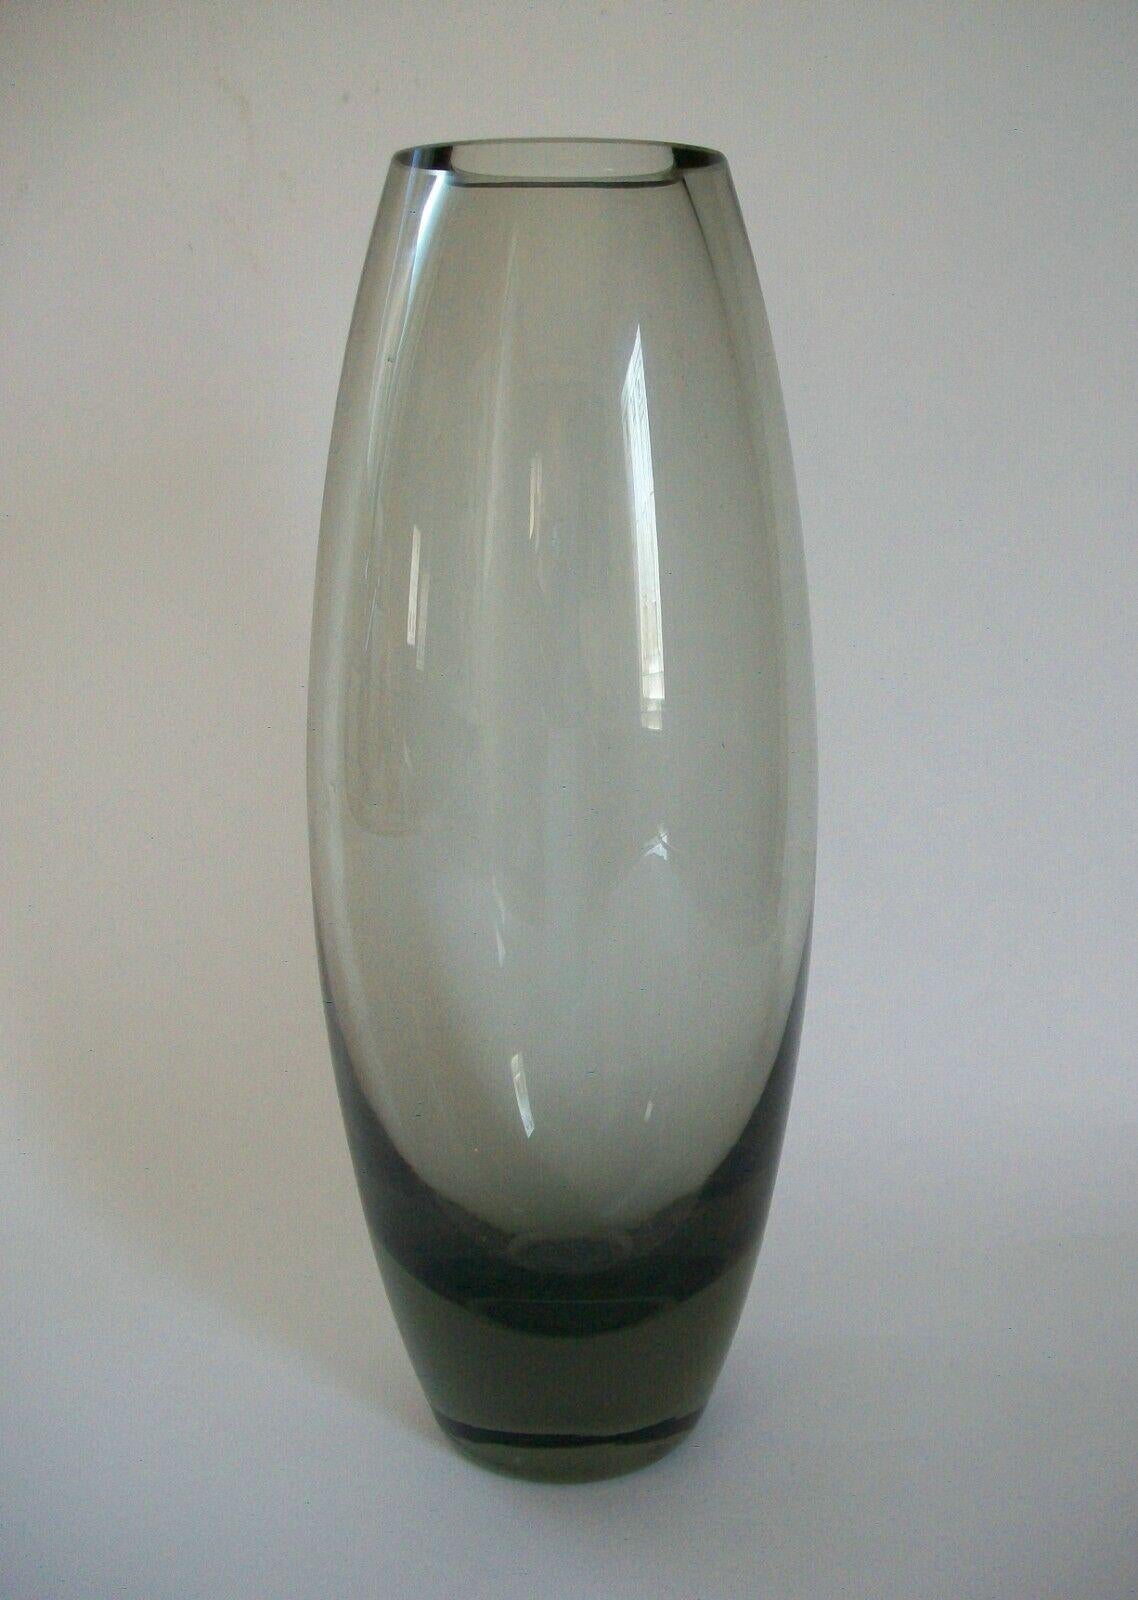 Holmegaard (Manufacturer) - PER LÜTKEN (1916-1998 Designer) - Hellas (Model) - Mid Century Modern smokey grey studio glass vase - signed and numbered on the base - Denmark - circa 1970's.

Excellent vintage condition - no loss - no damage - no